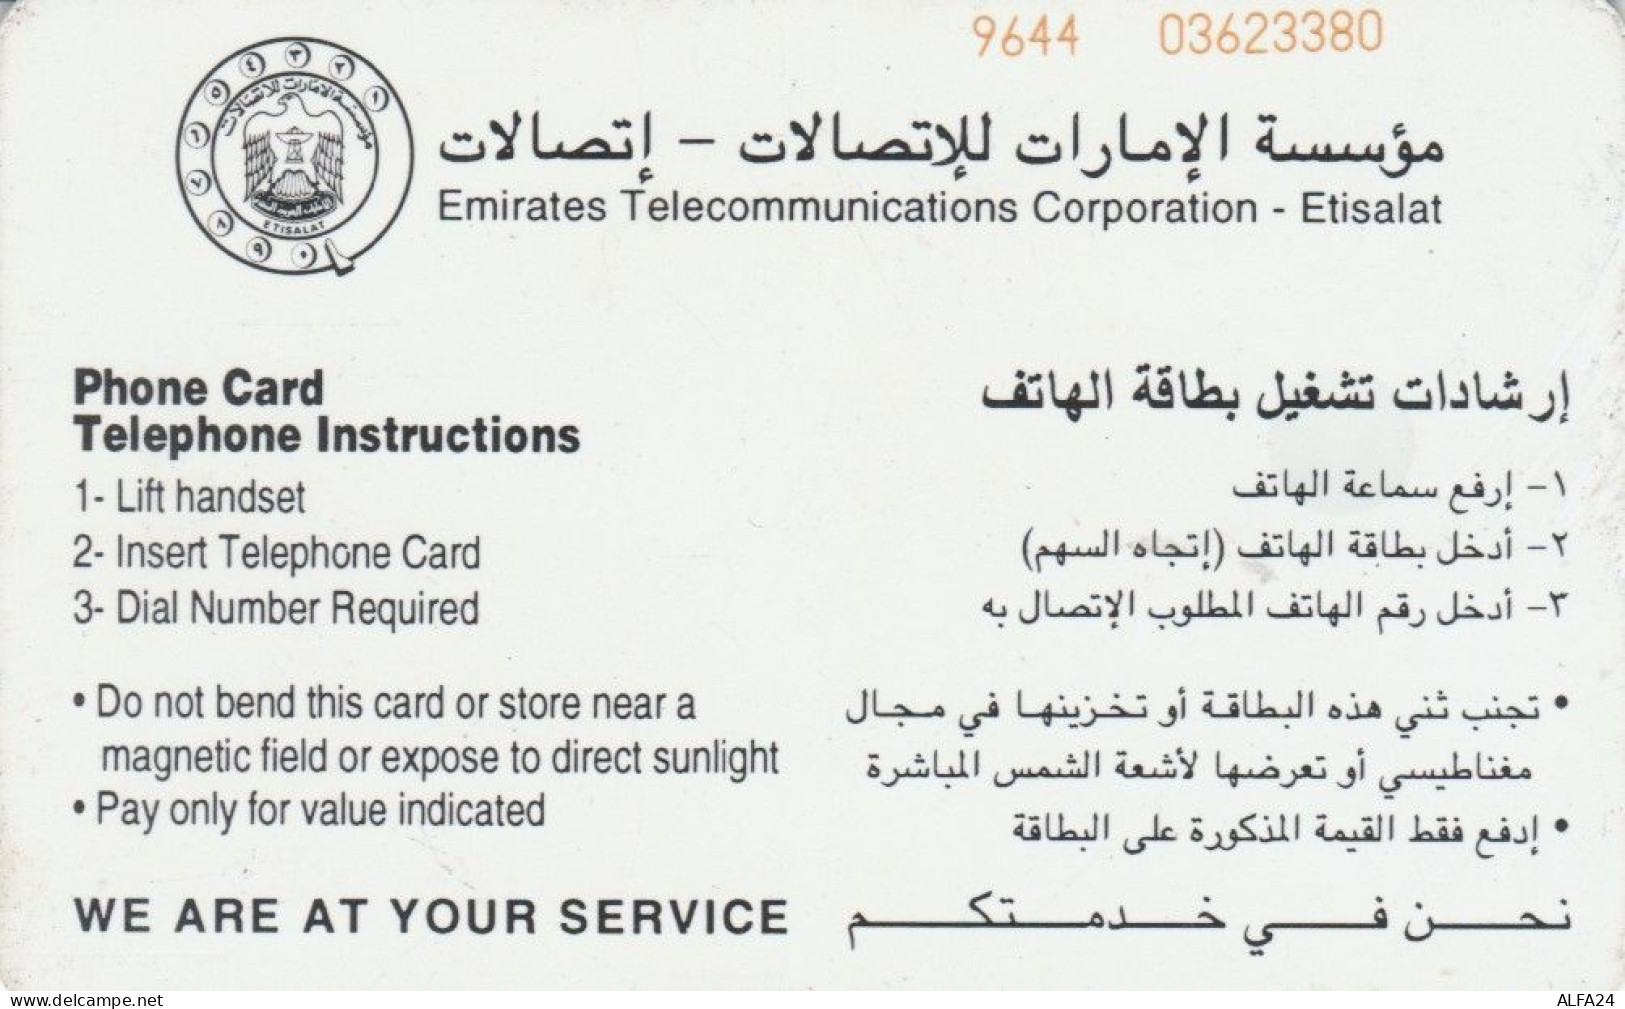 PHONE CARD EMIRATI ARABI (E70.18.2 - Emirats Arabes Unis